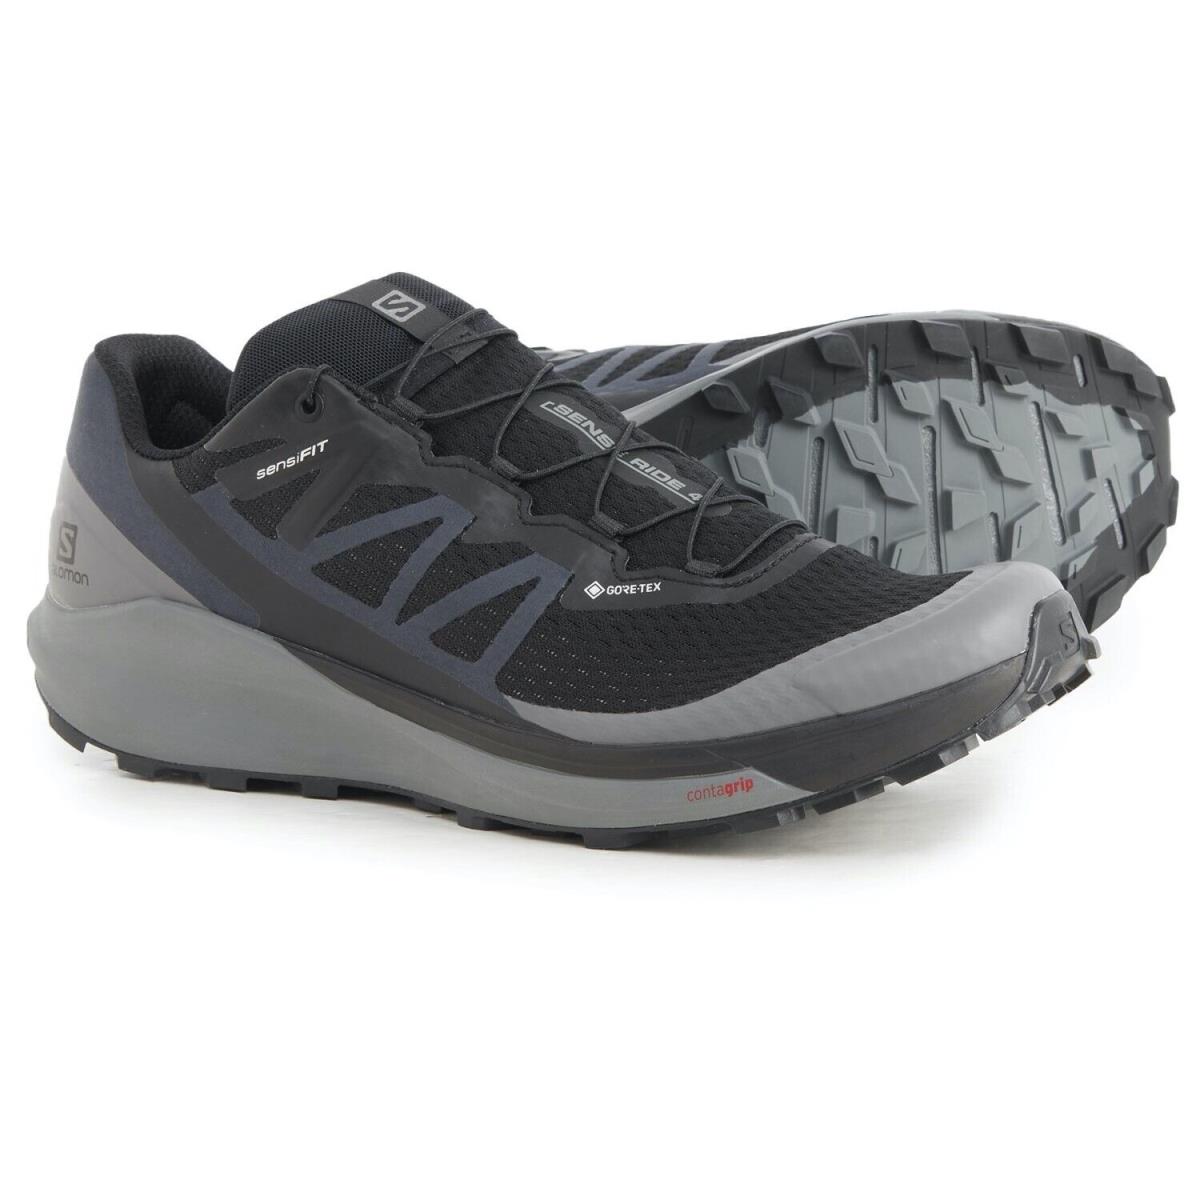 Salomon Sense Ride 4 Gtx Goretex Waterproof Black Shade Mens 13 Hiking Shoe Boot